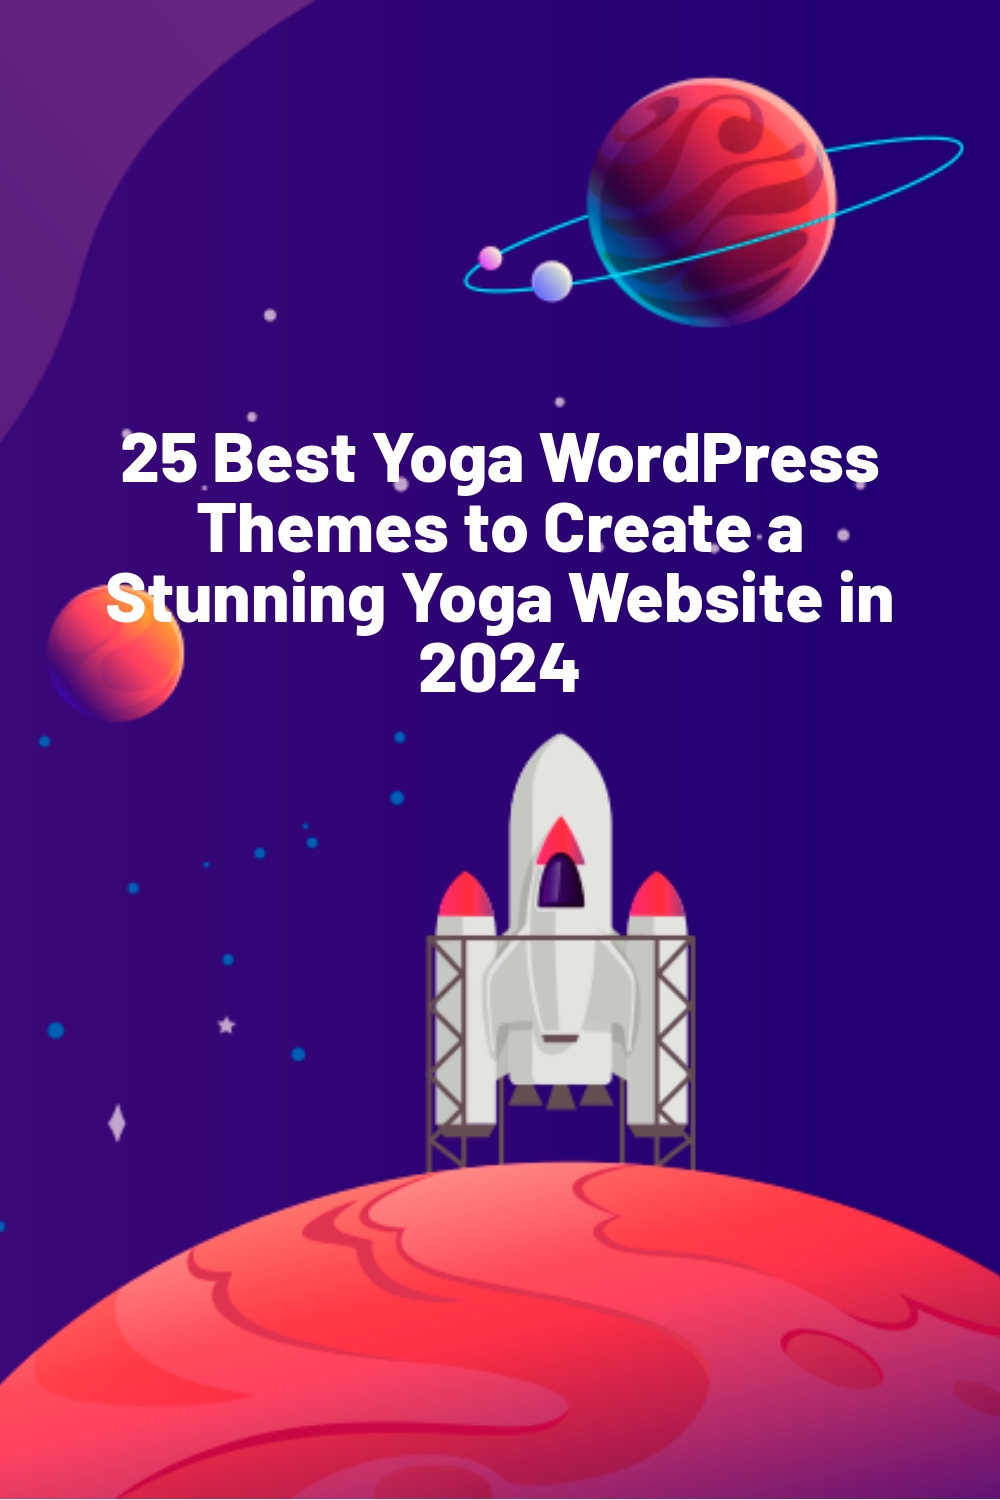 25 Best Yoga WordPress Themes to Create a Stunning Yoga Website in 2024